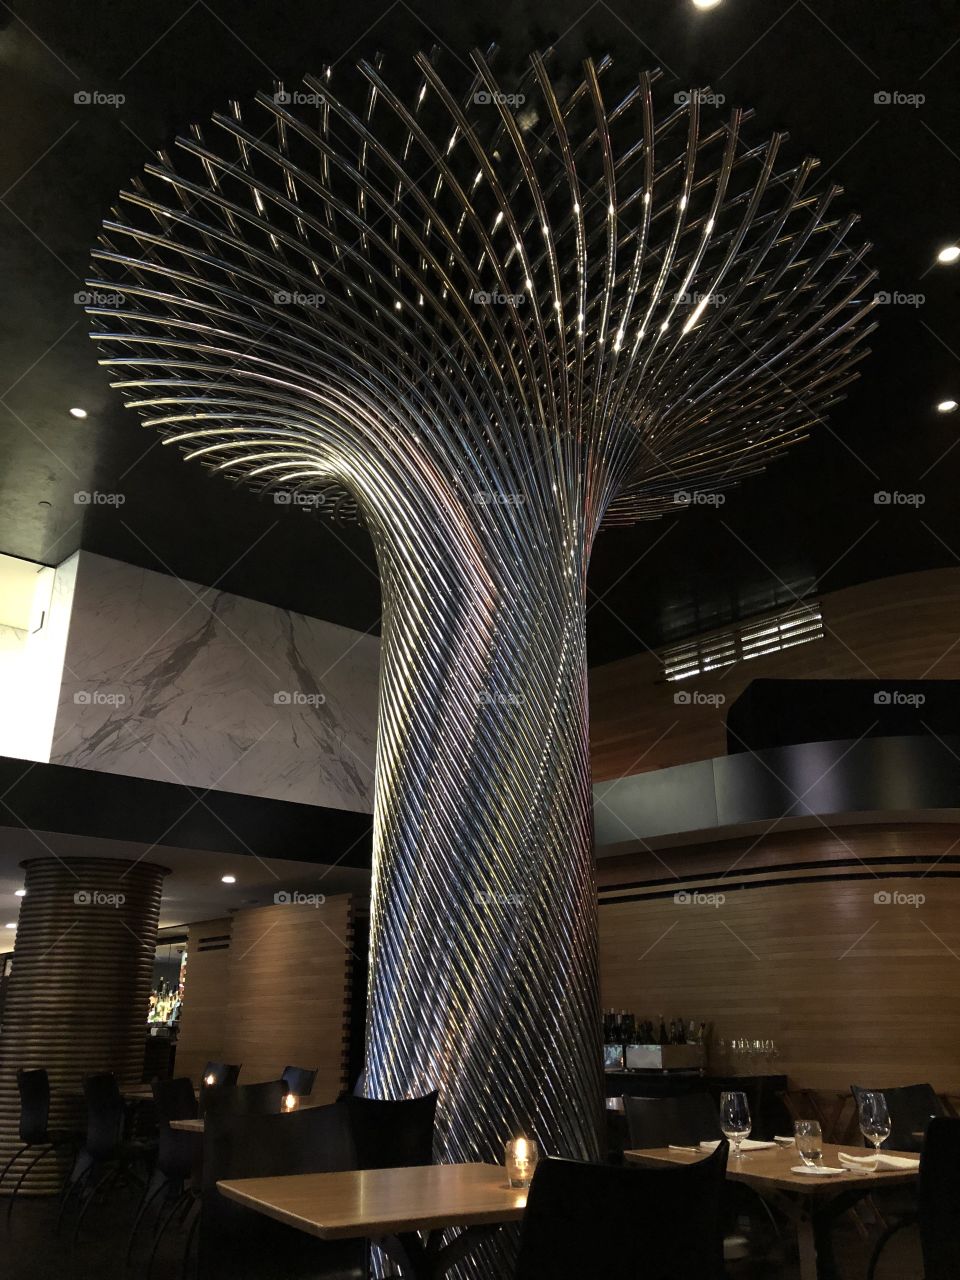 Shiny metal bars twist upwards in a circular pattern to create a stunning centerpiece of a modern restaurant